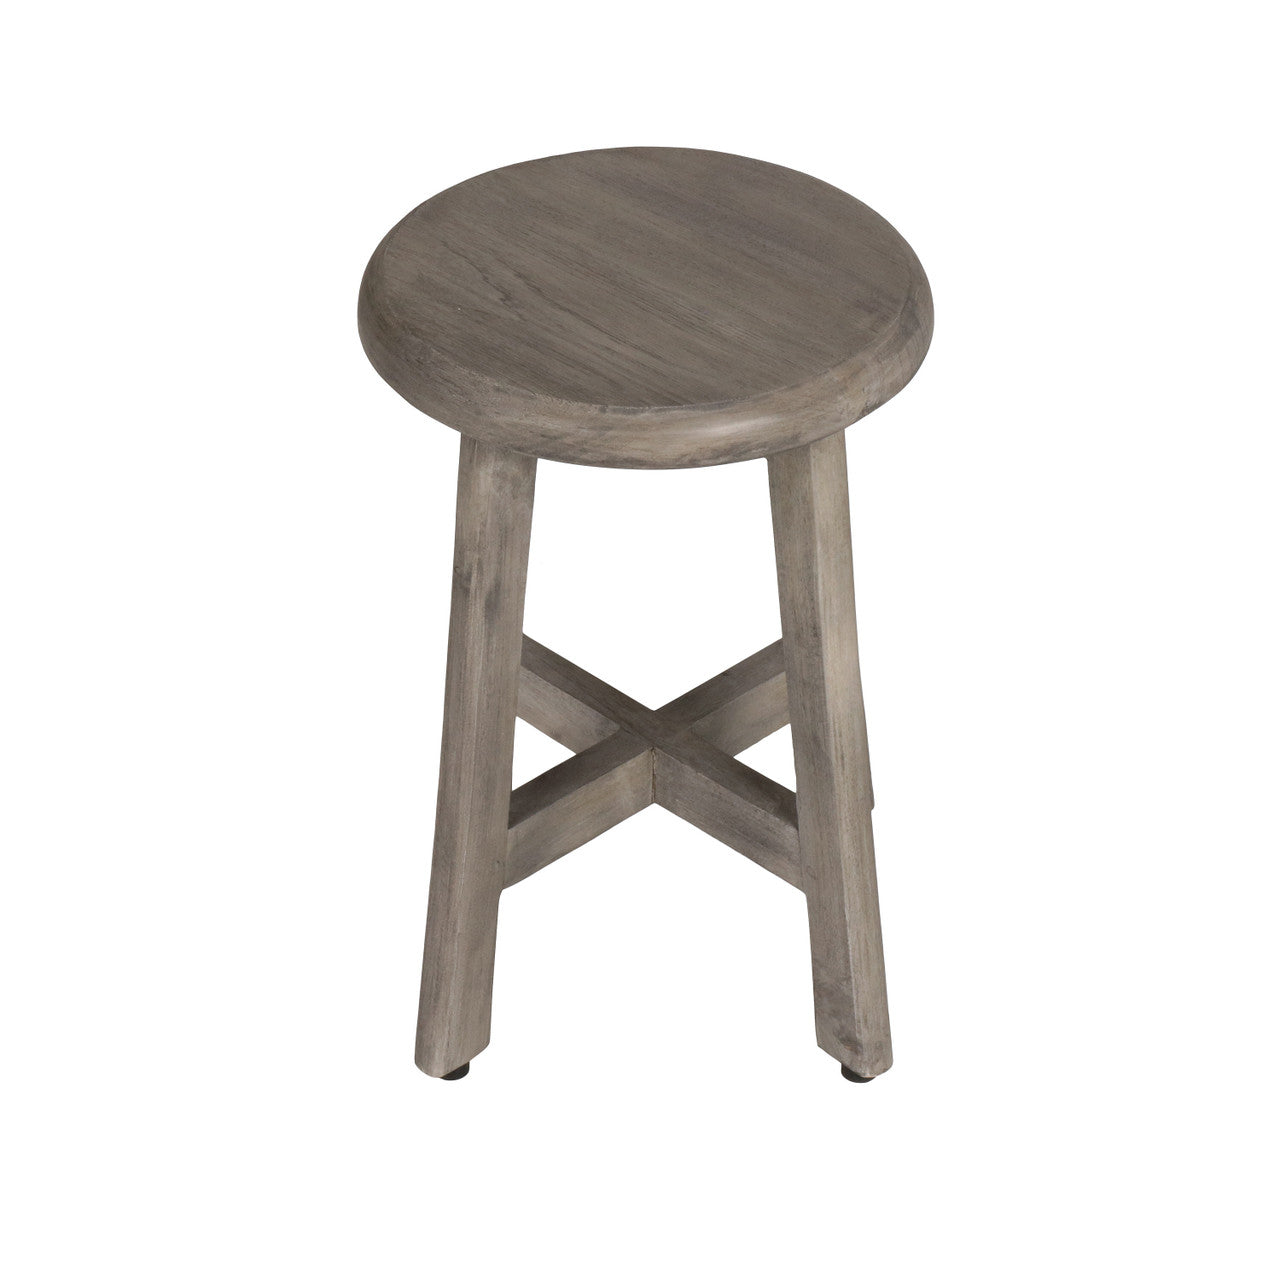 DecoTeak® Shoji® 18" Teak Wood Shower Stool with 12" Round Seat in Antique Gray Finish